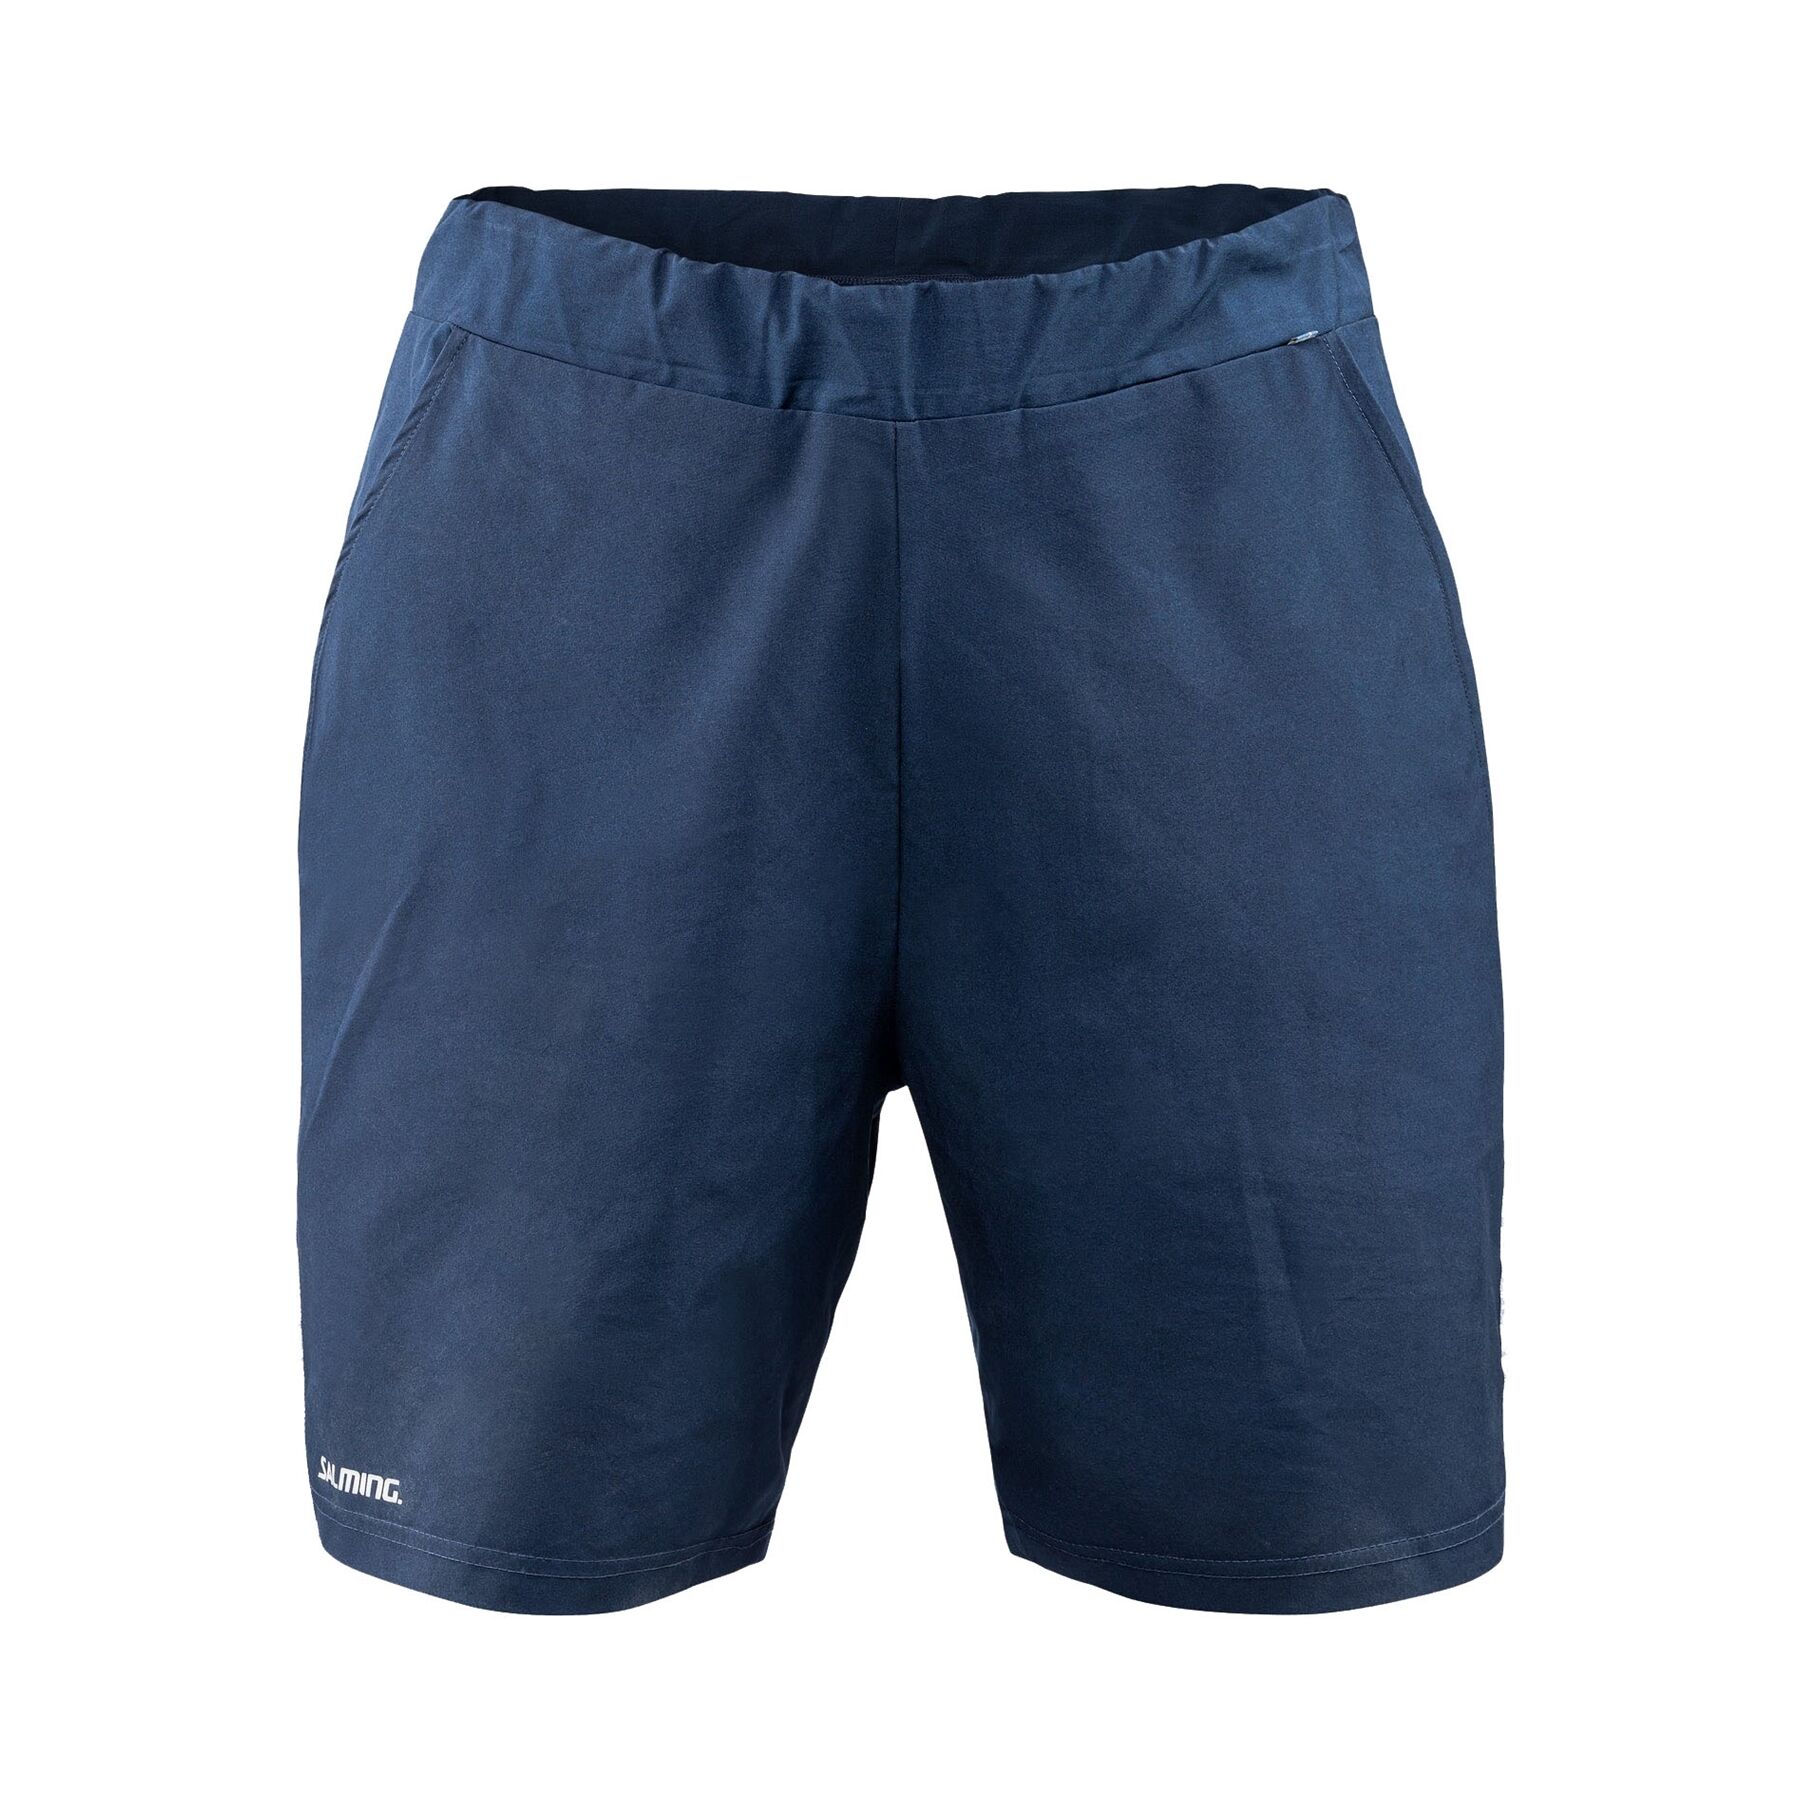 Salming Classic Shorts Navy XL